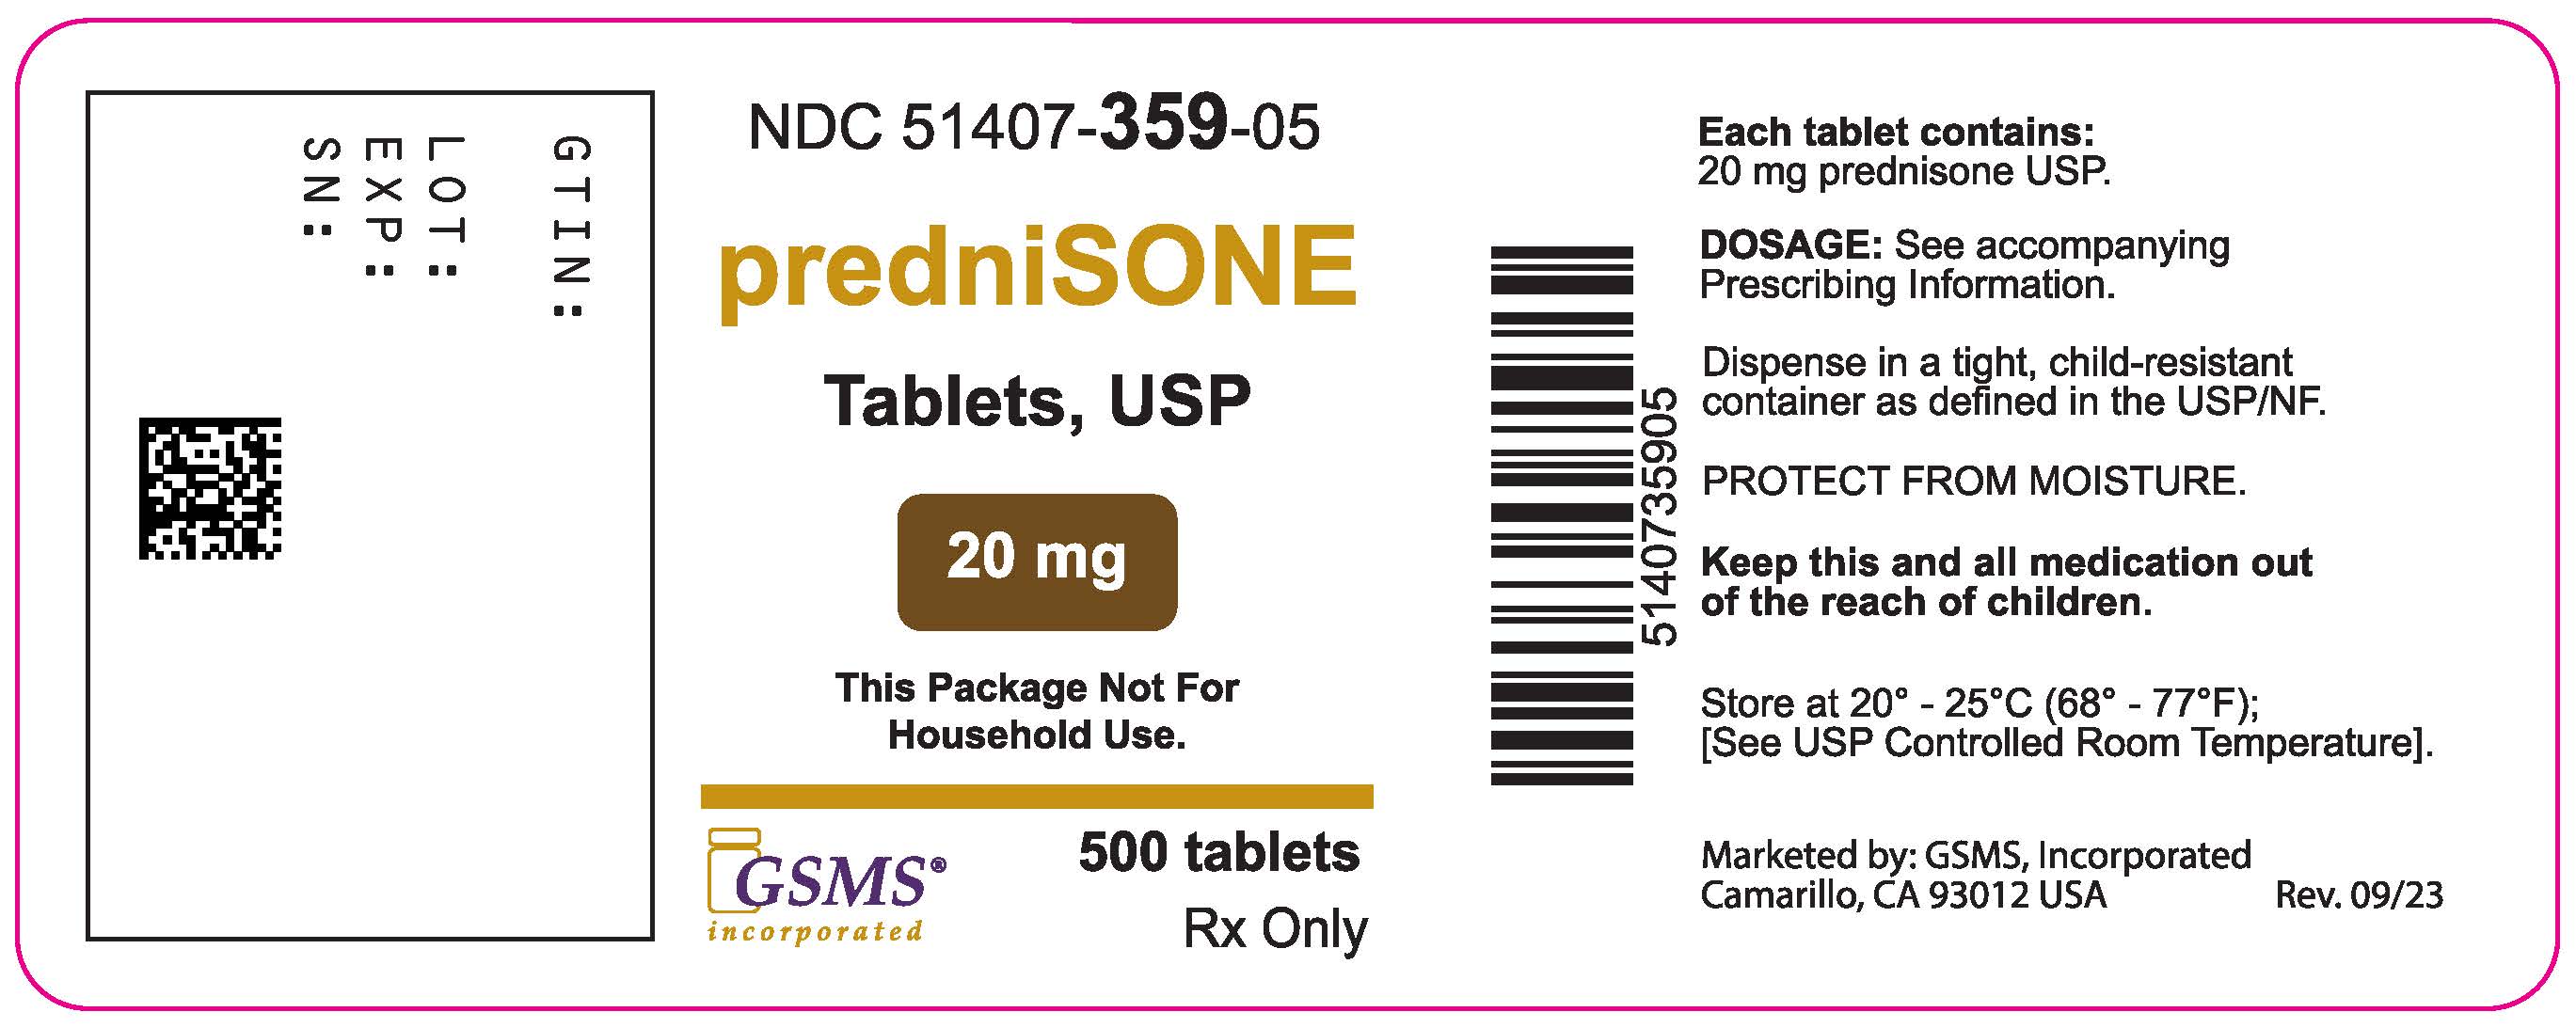 51407-359-05LB - Prednisone Tablets - Rev. 0923.jpg